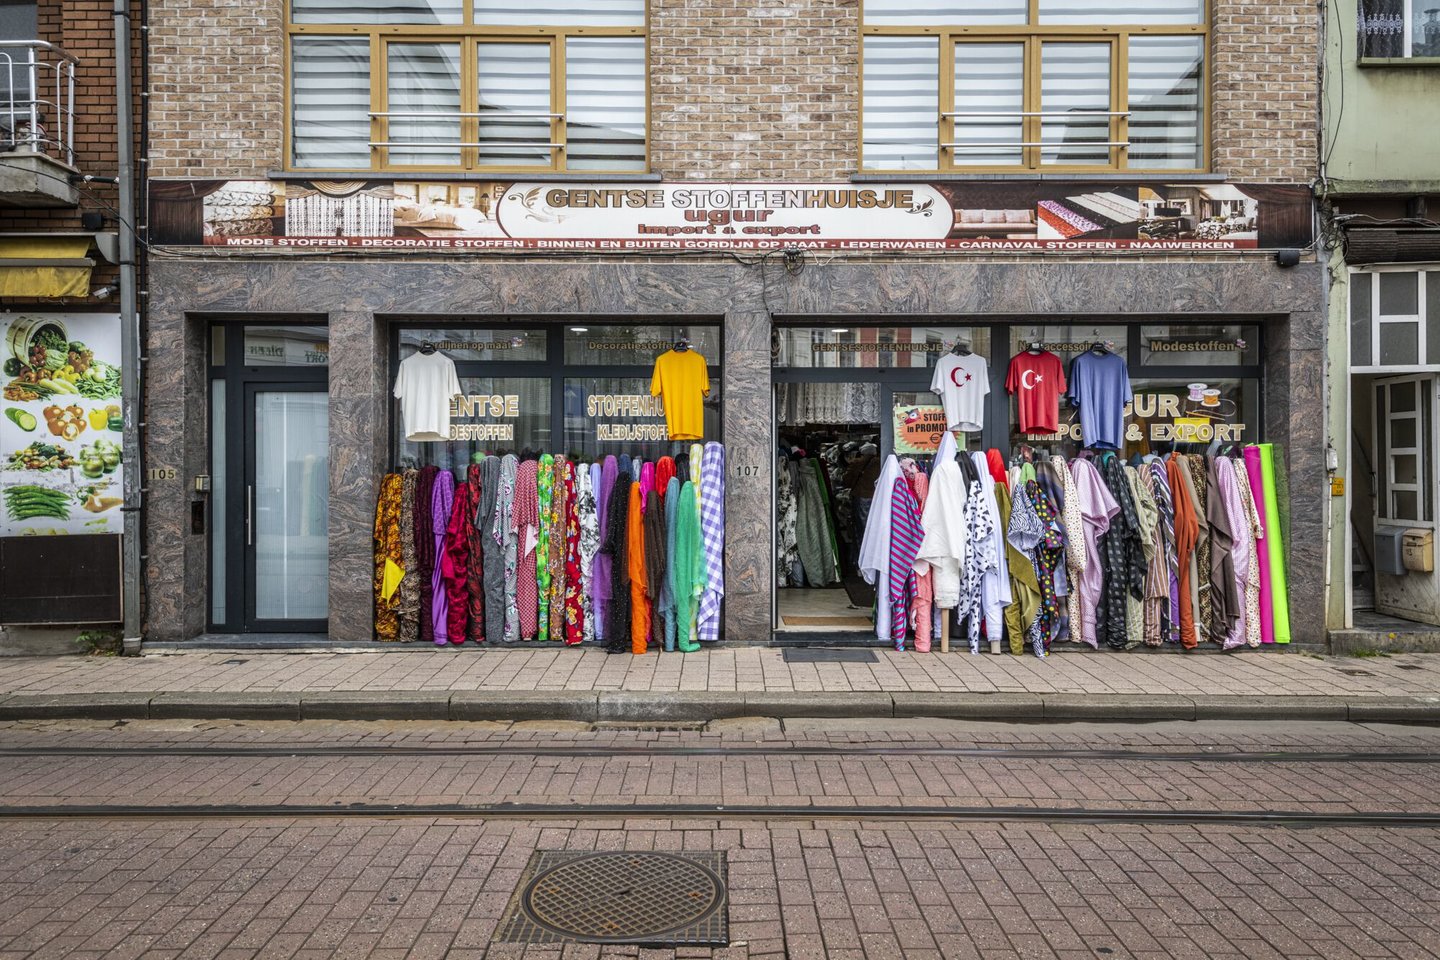 Etalage van stoffenwinkel Gentse stoffenhuisje Ugur in Gent